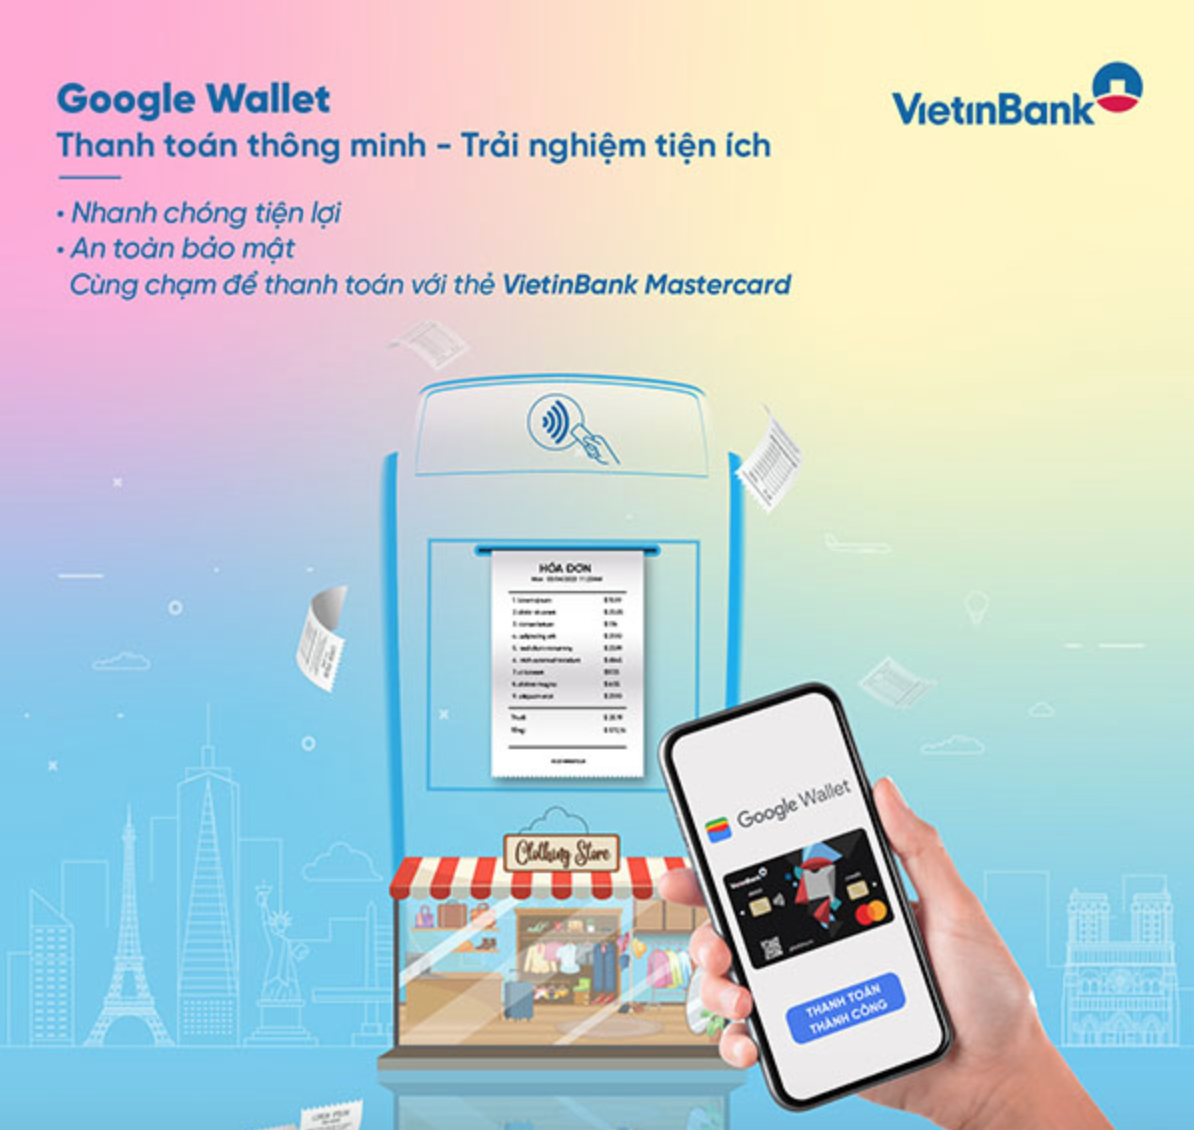 Lợi ích khi sử dụng Google Wallet Vietinbank